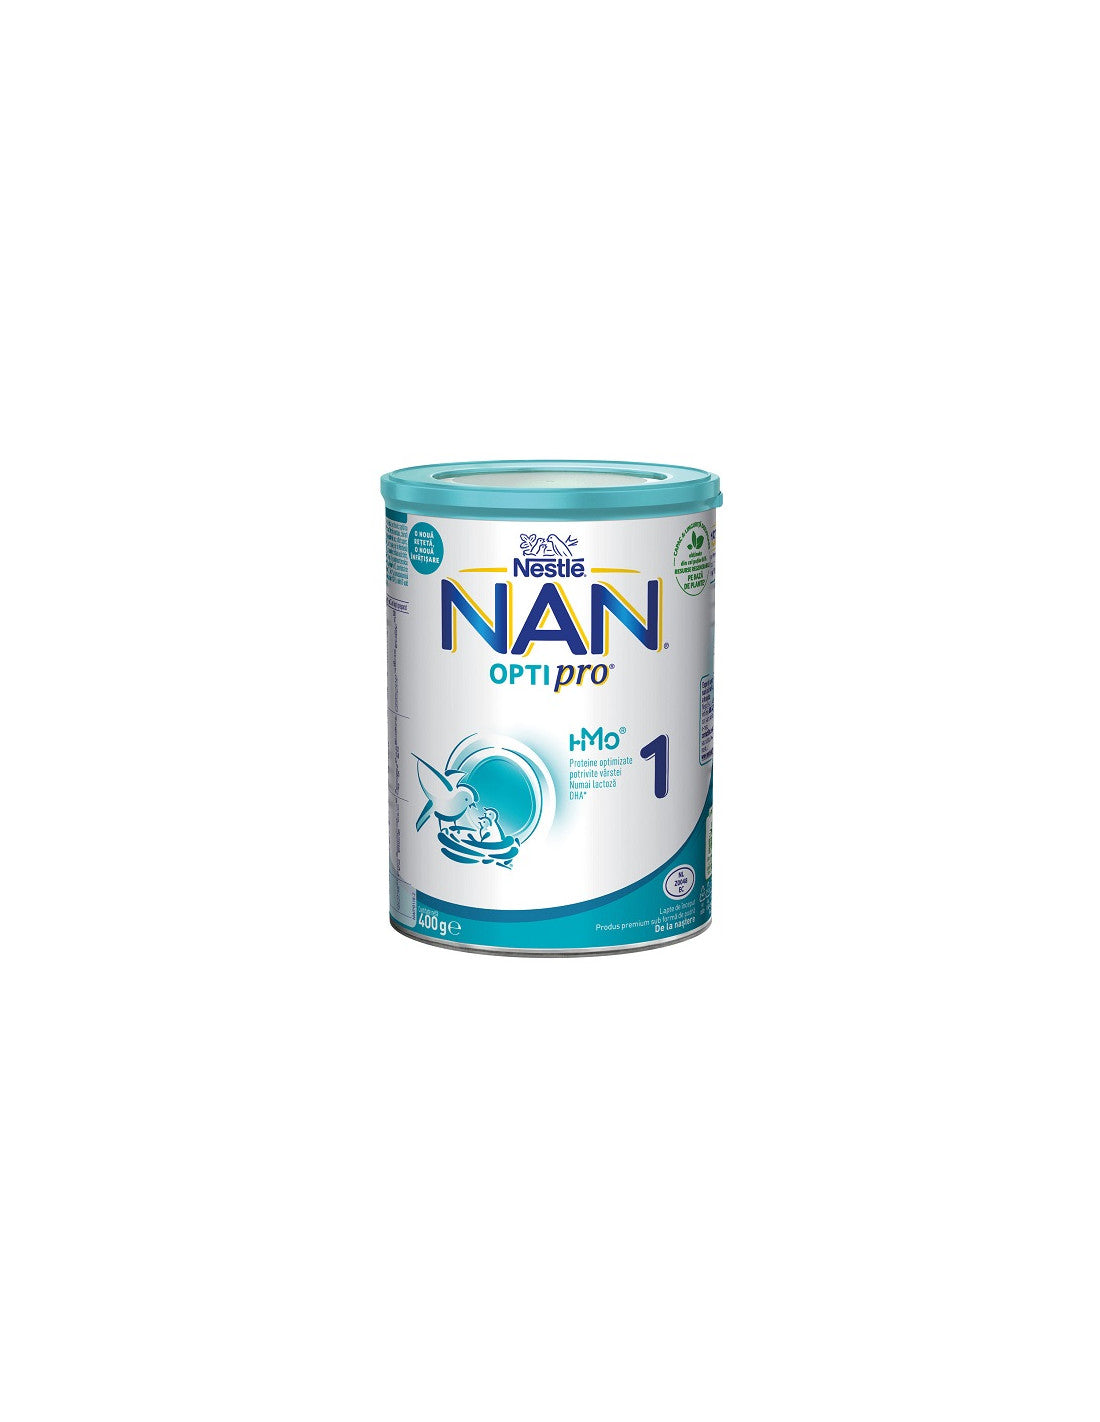 NESTLE NAN Optipro 1 HM-O, formula speciala lapte praf, premium de inceput de la nastere, 400 g infant-ro